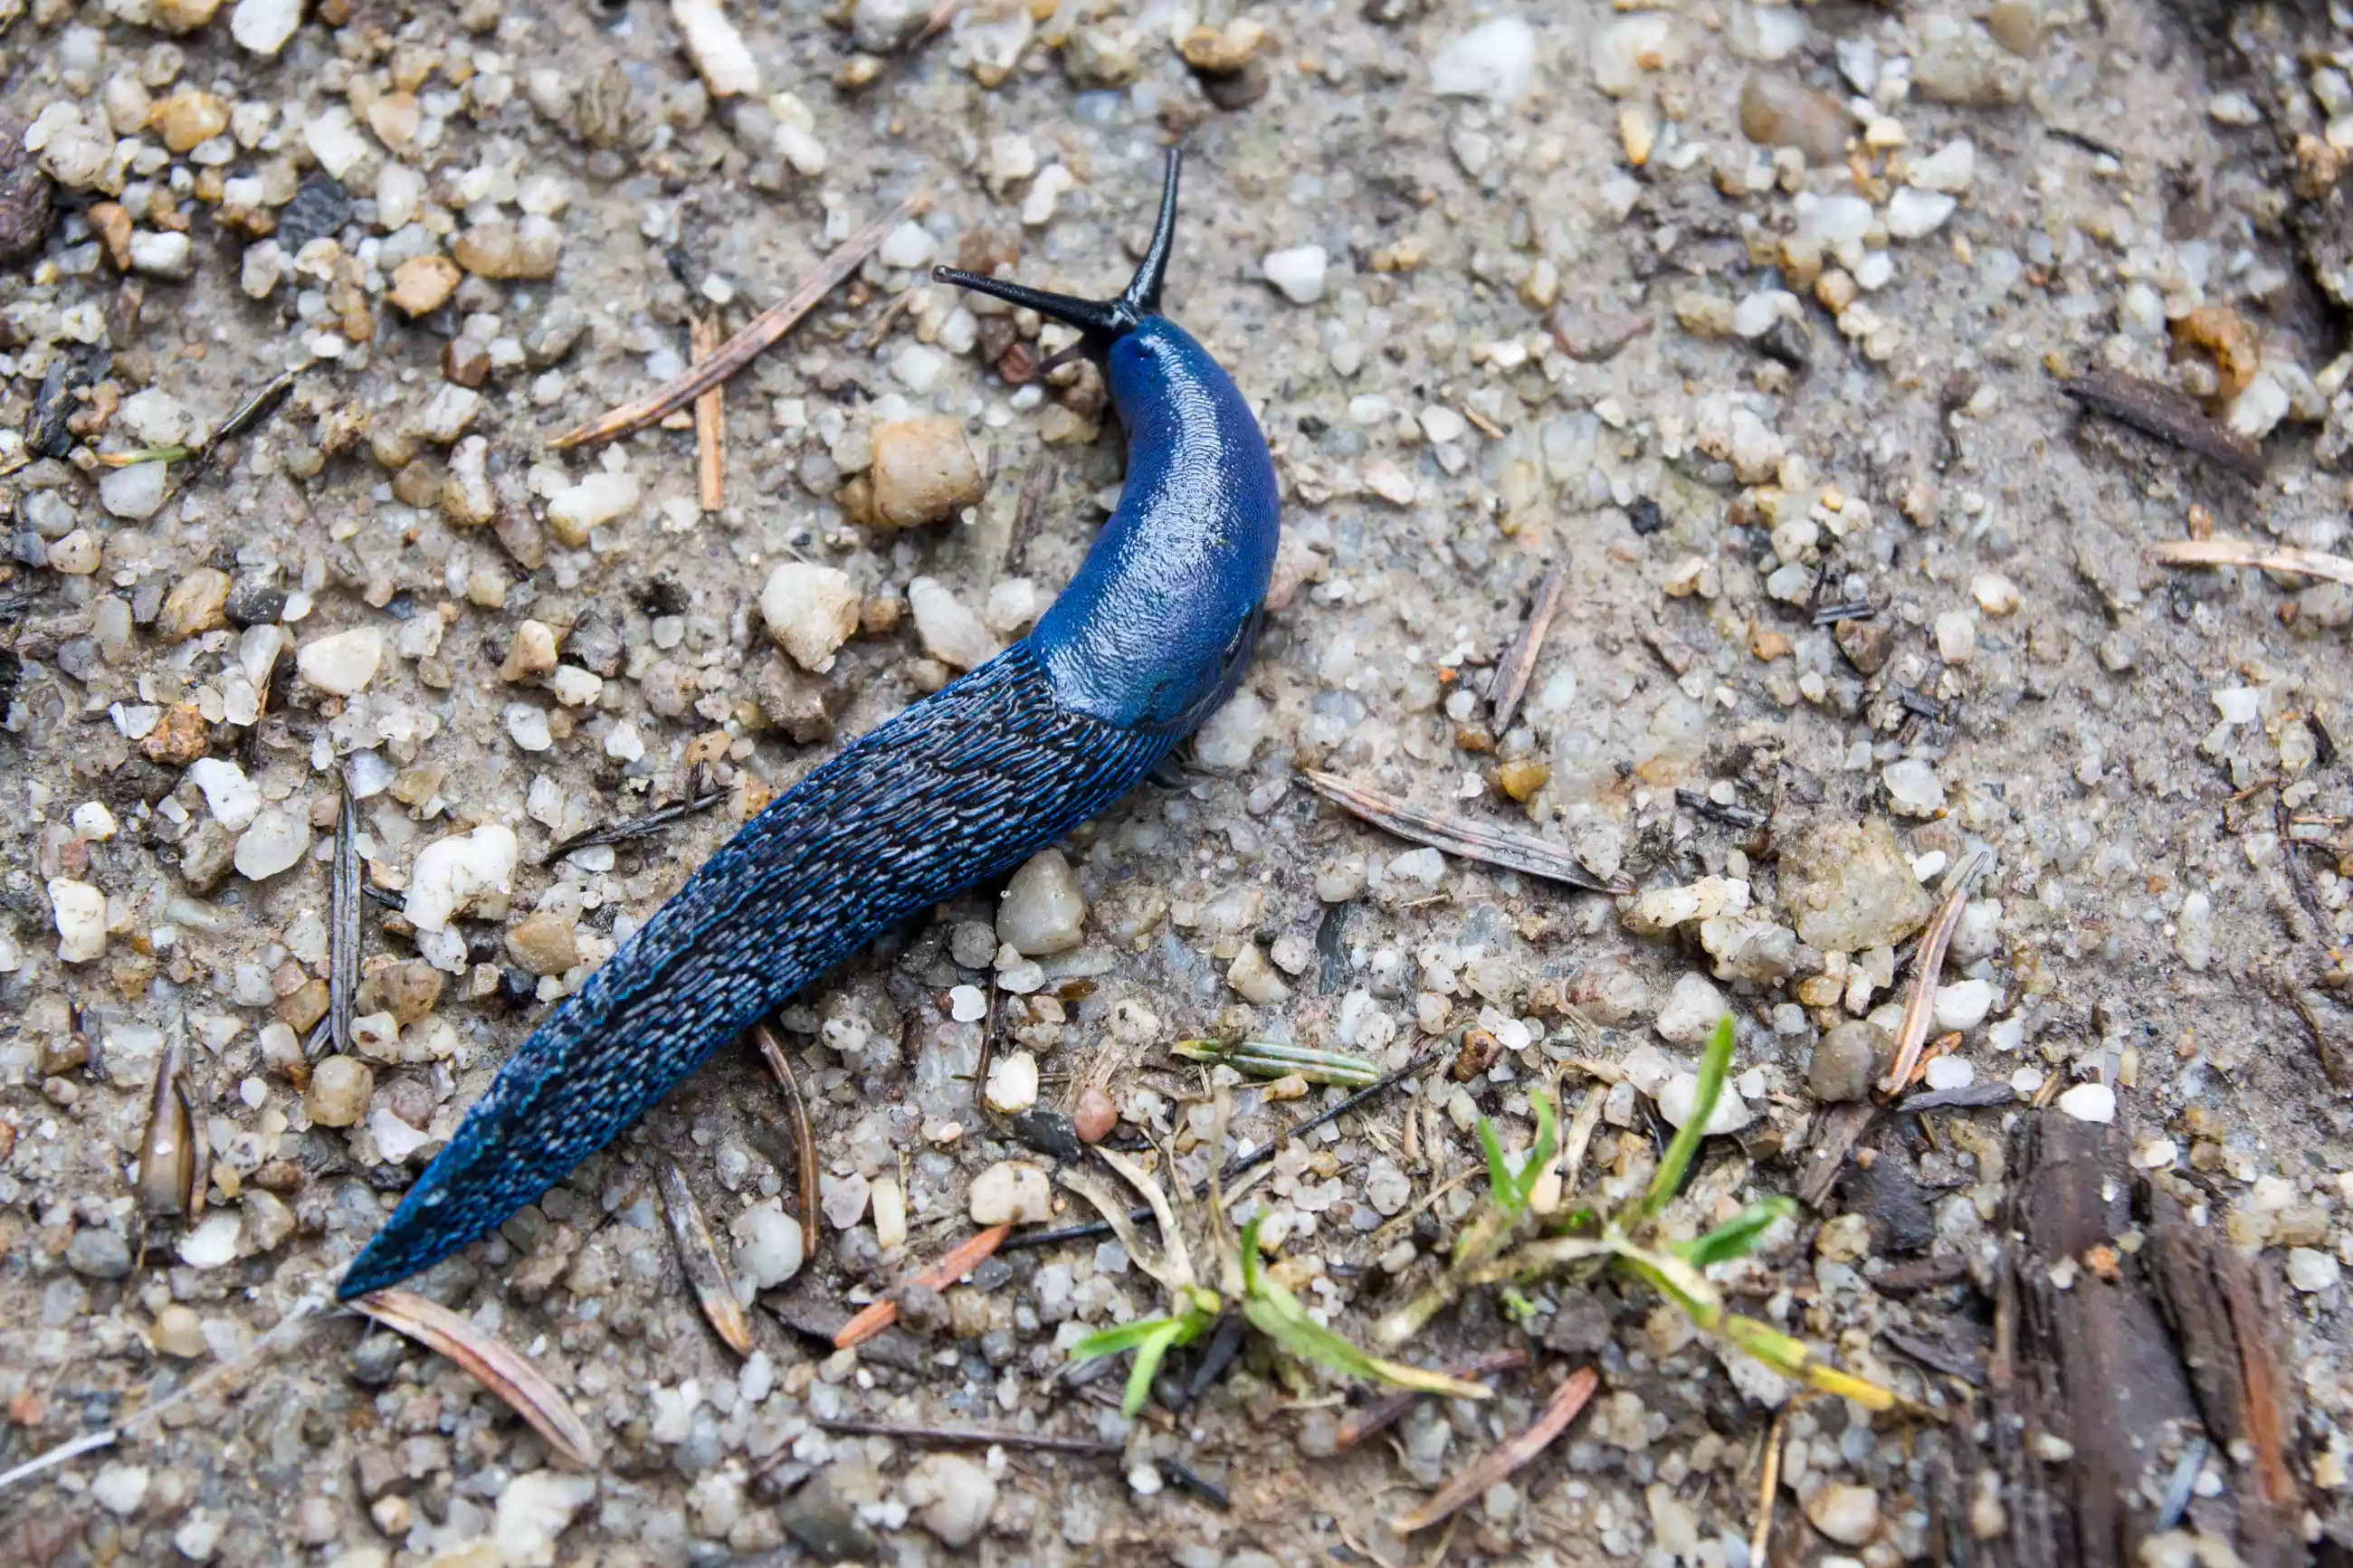 A Carpathian blue slug resting on gravel